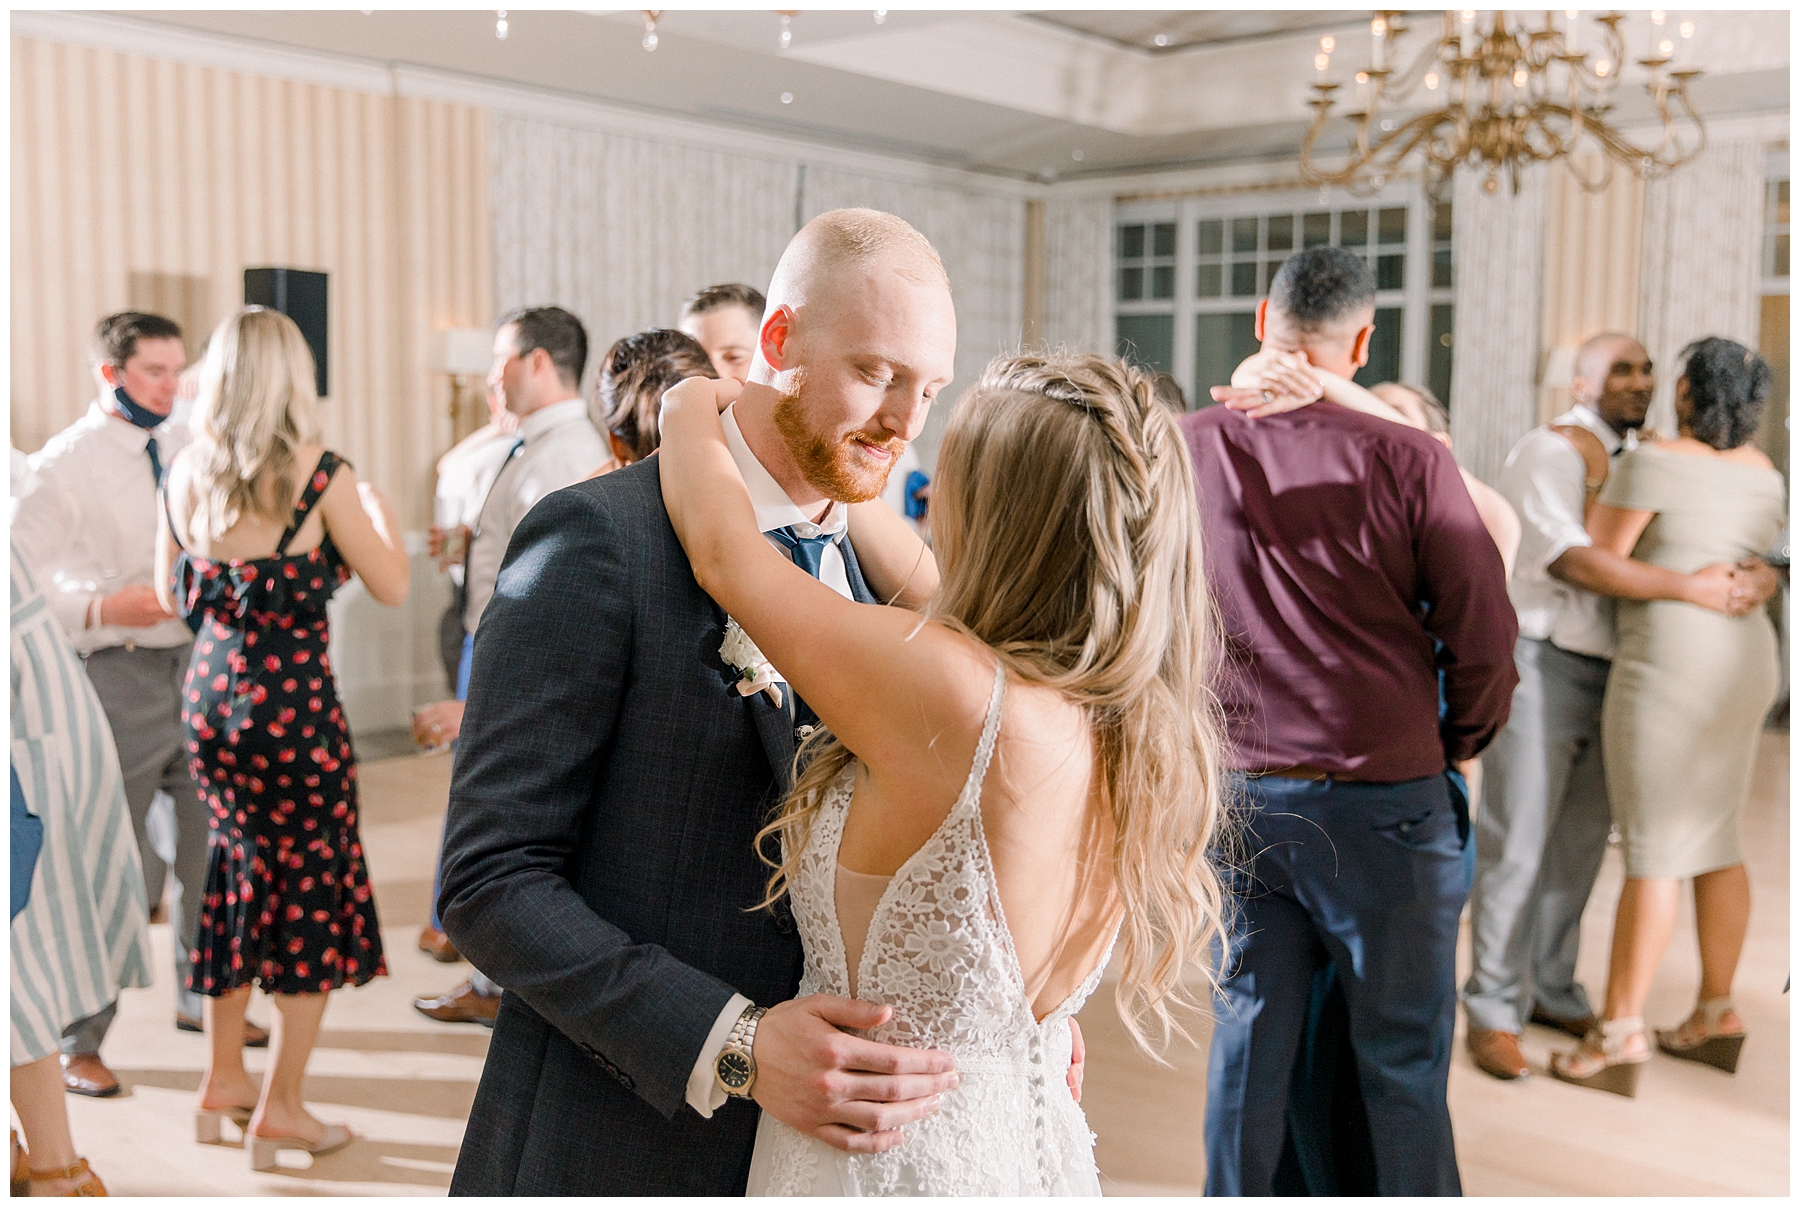 husband + wife dance at wedding reception